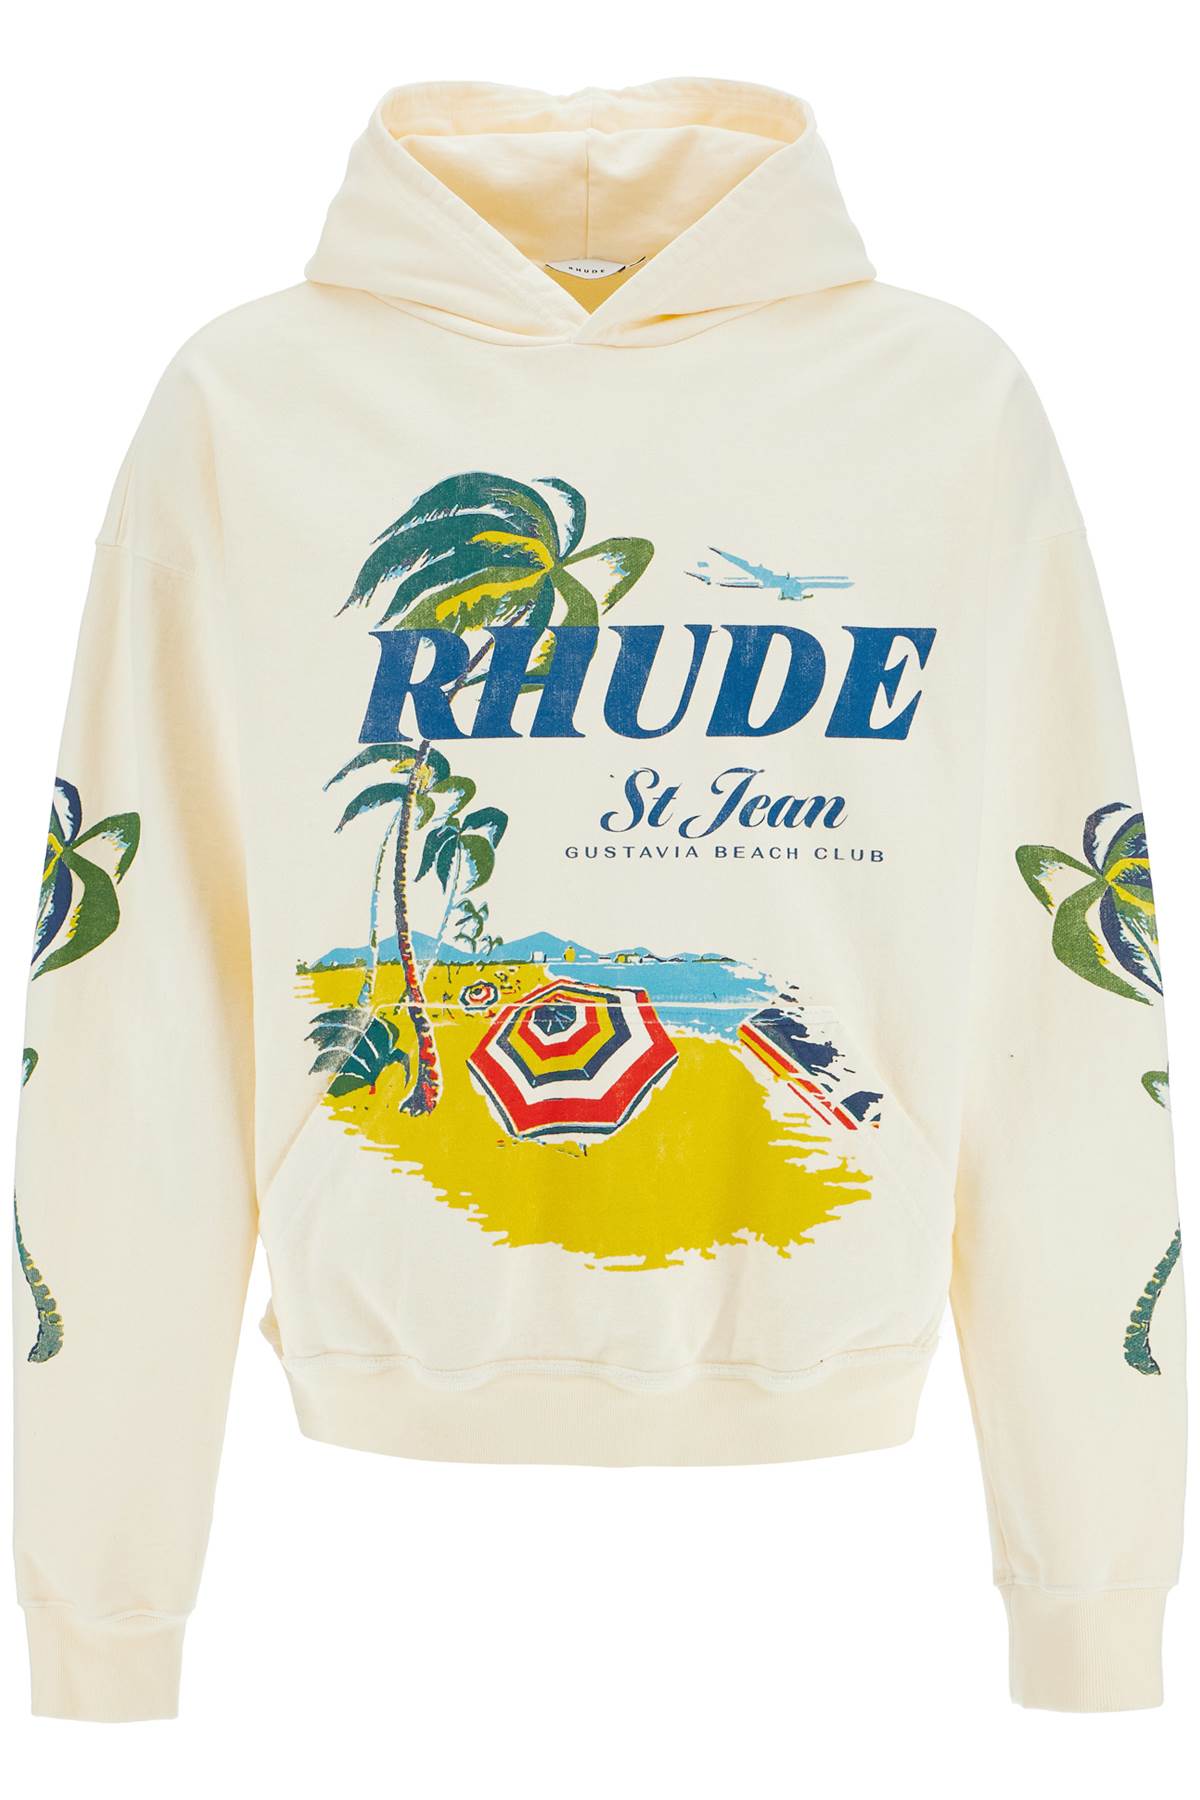 RHUDE BEACH CLUB PRINTED HOODIE